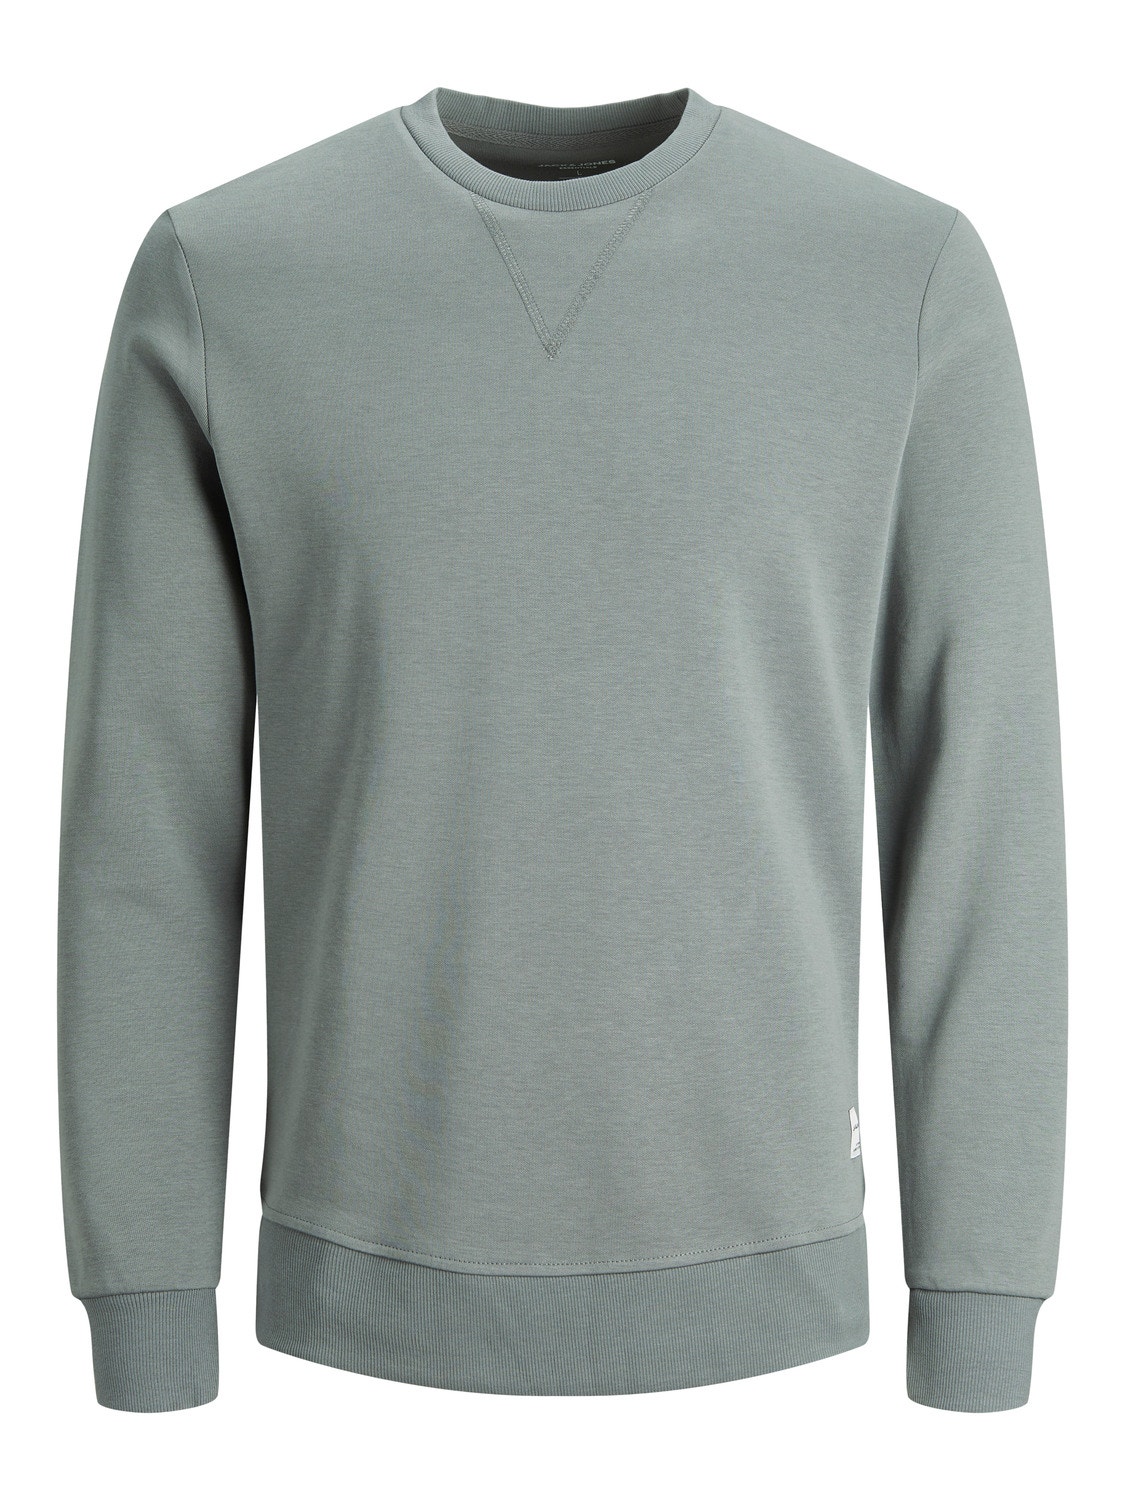 Jack & Jones Plain Crewn Neck Sweatshirt -Sedona Sage - 12181903